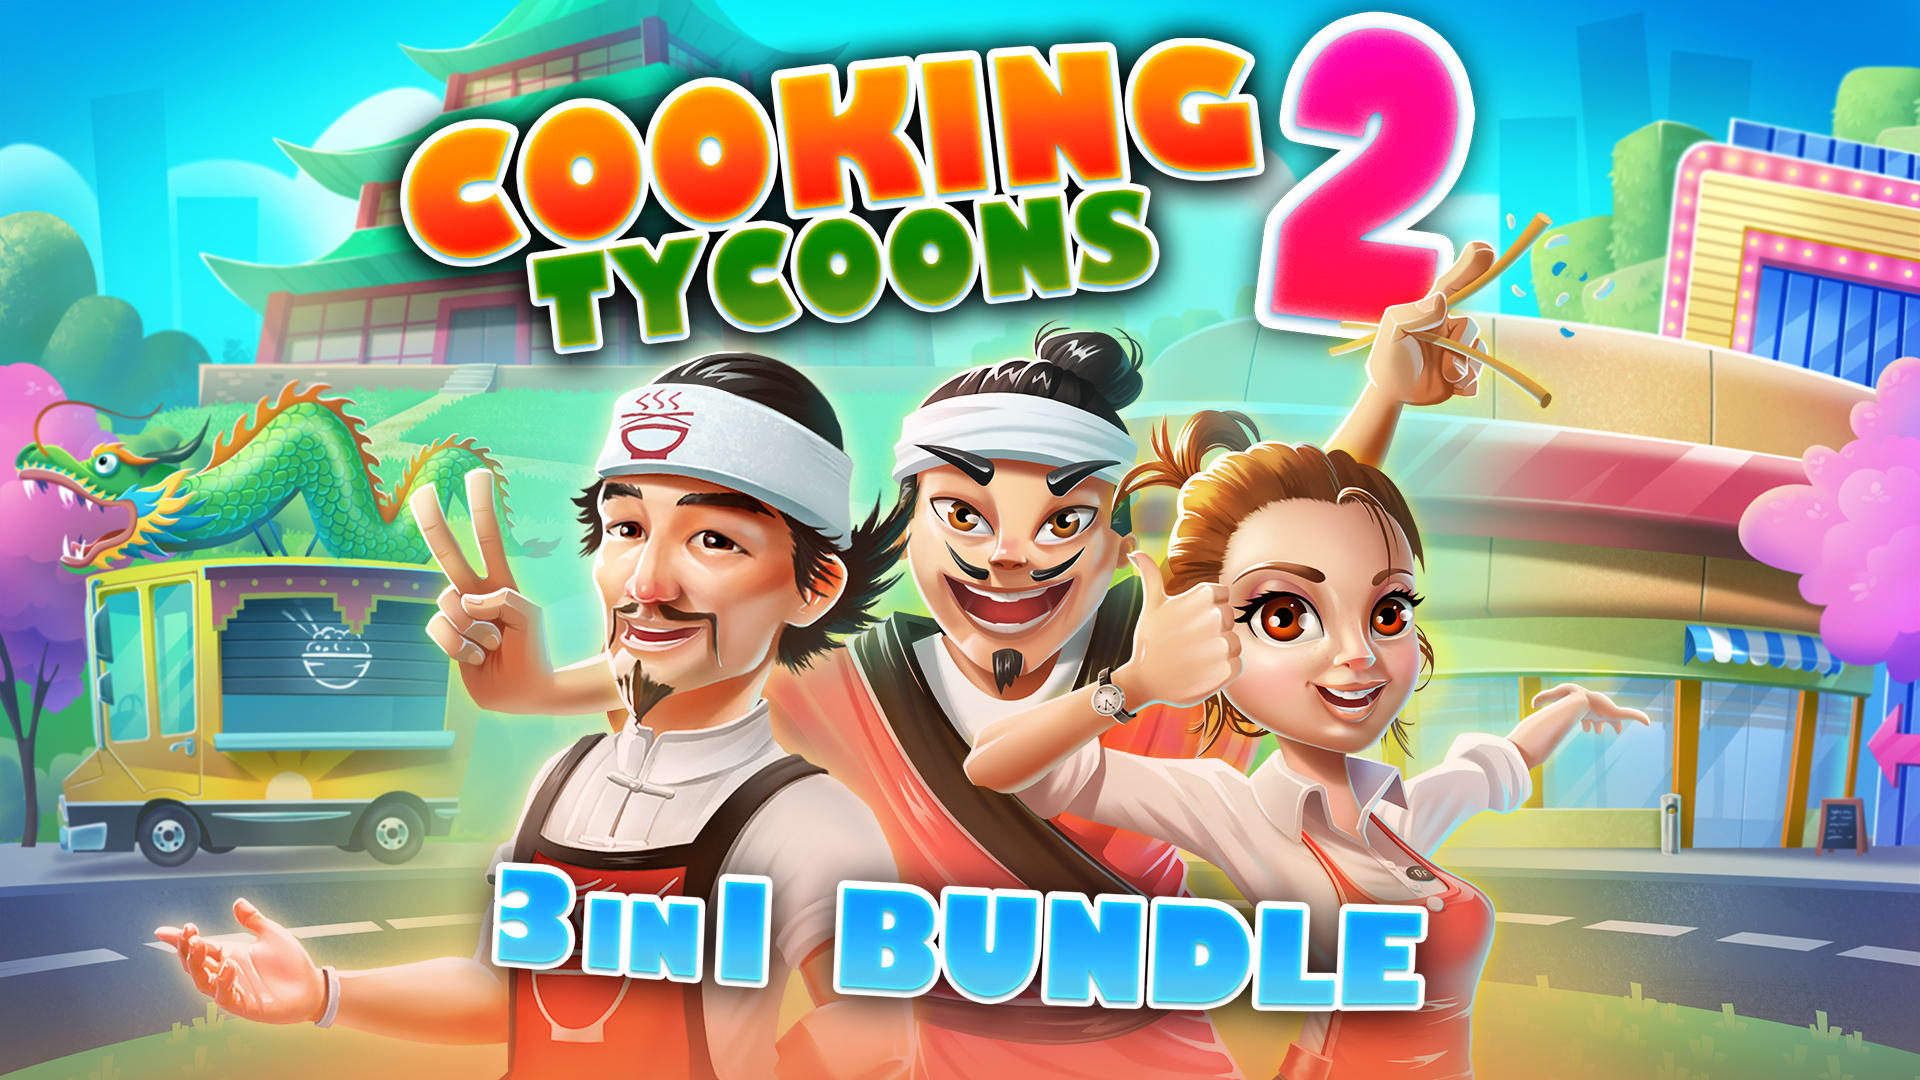 Cooking Tycoons 2 - 3 in 1 Bundle